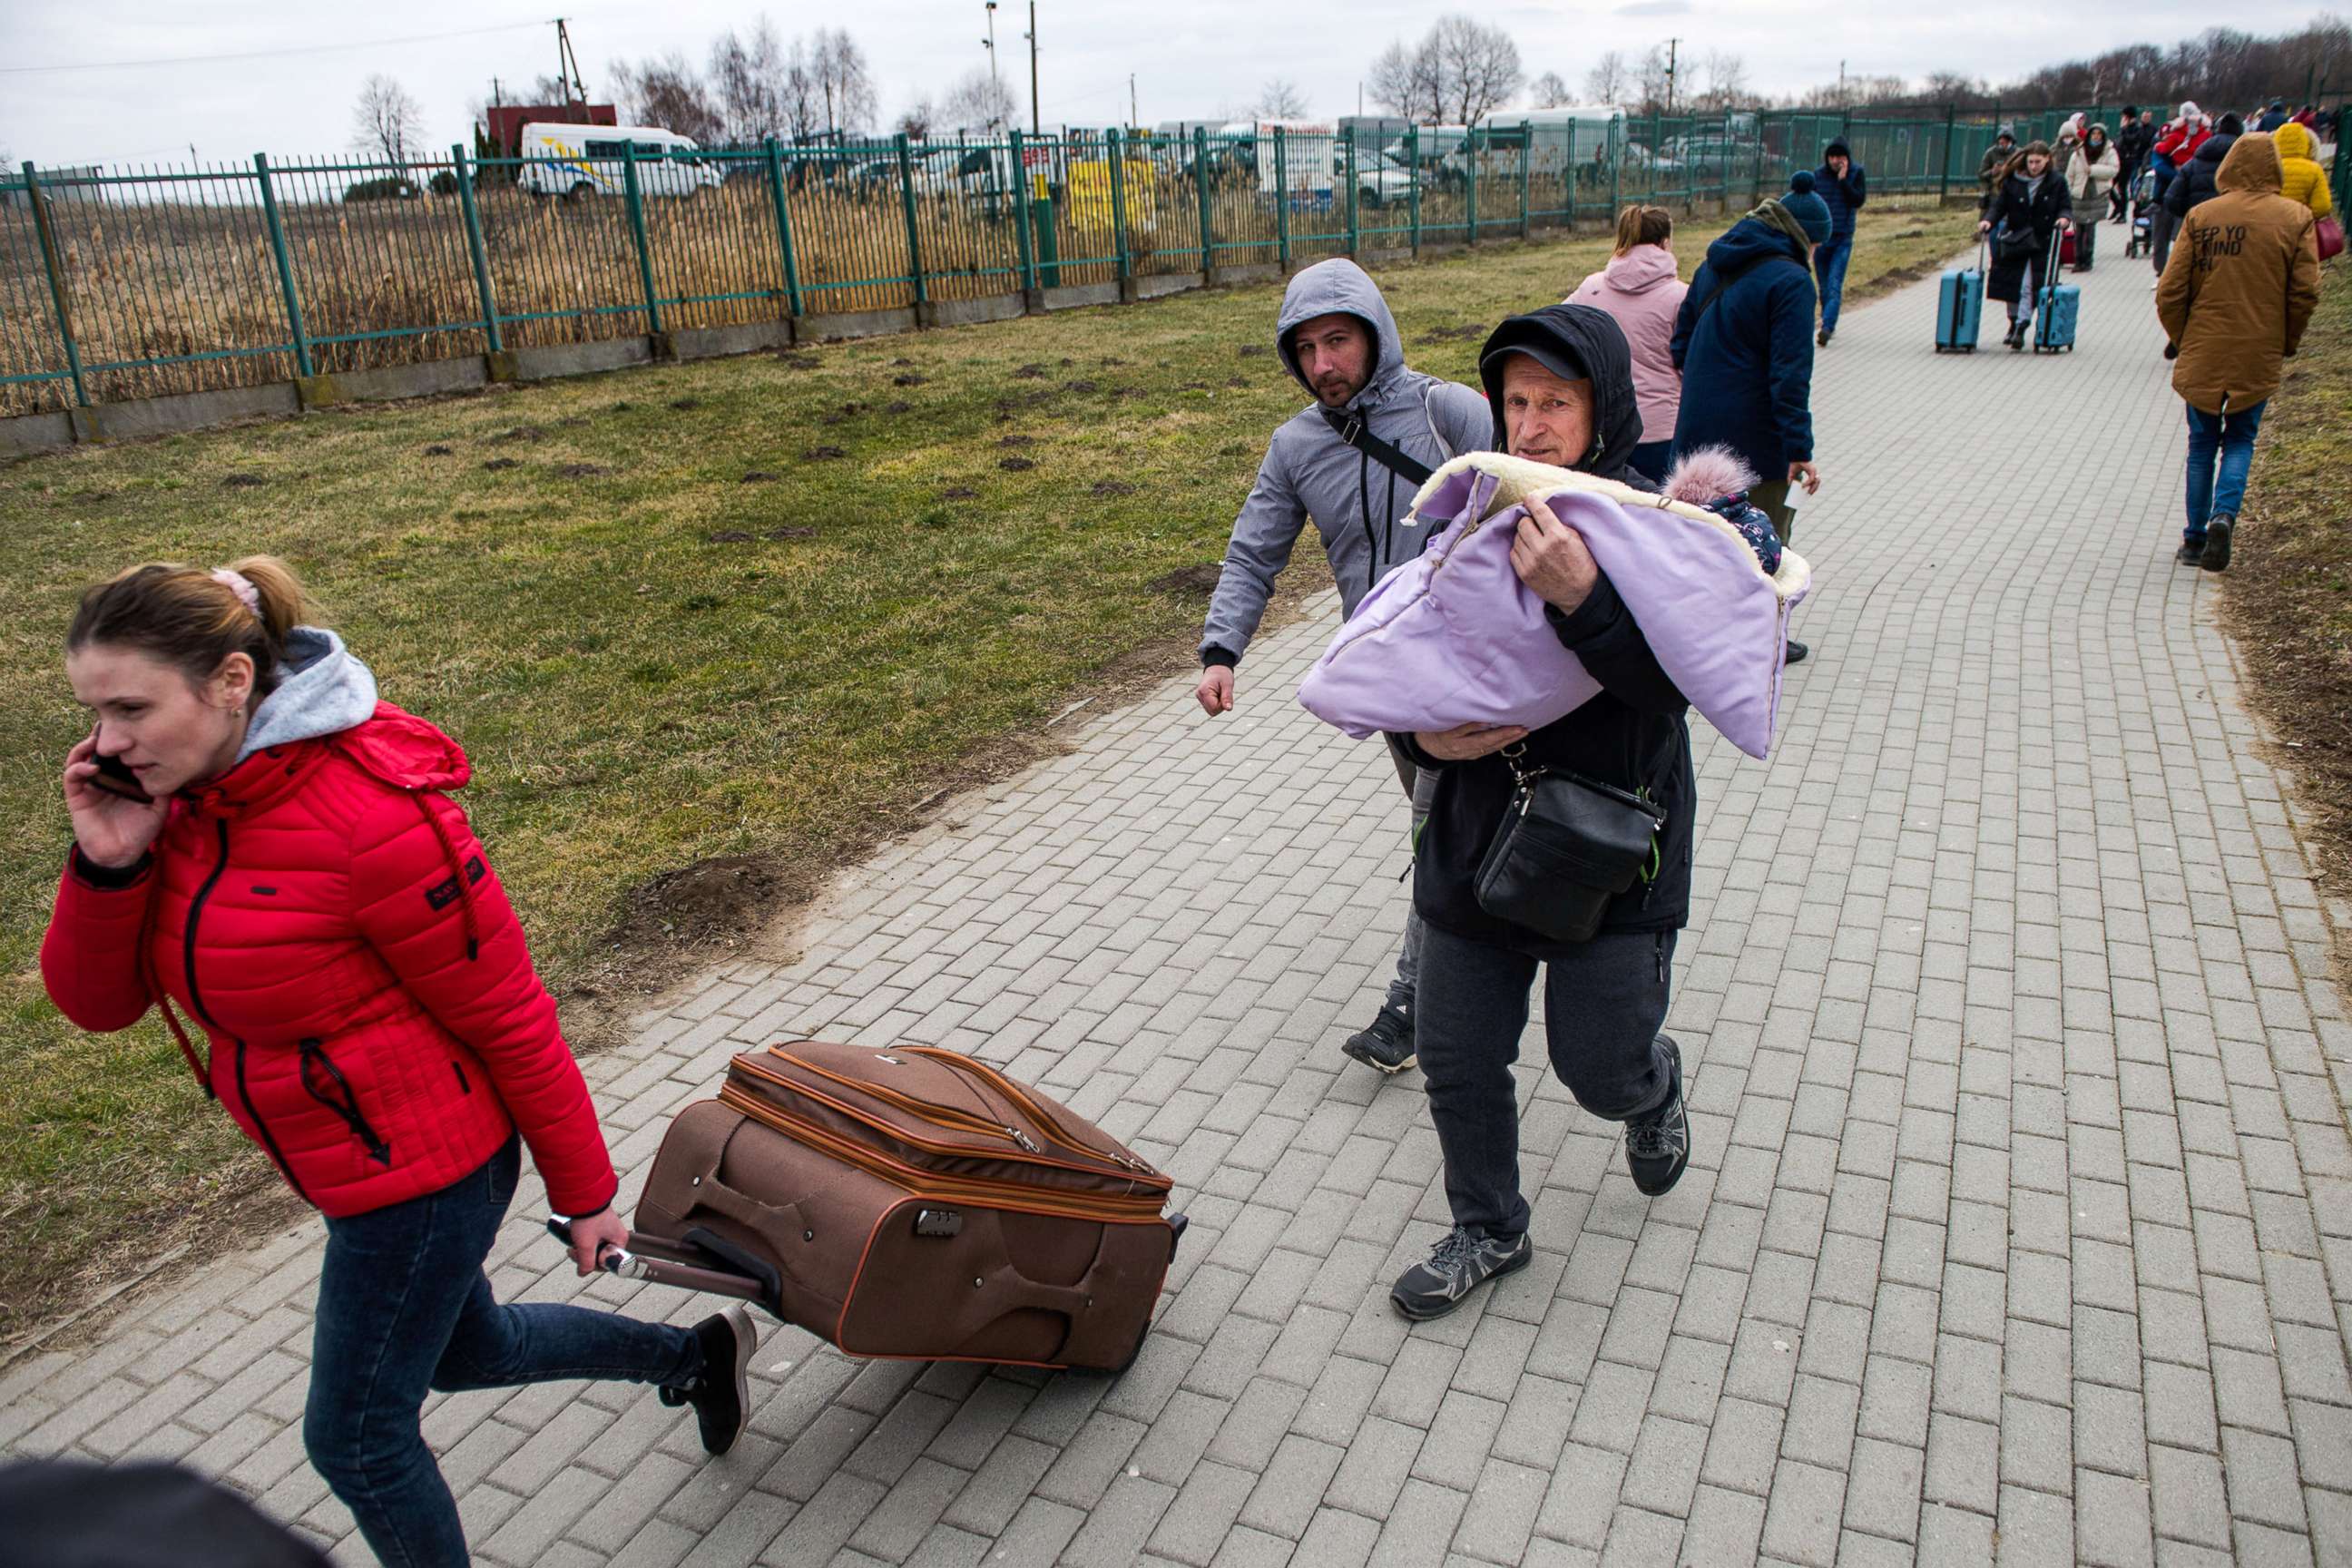 PHOTO: Ukrainian refugees are shown at the Medyka border in Medyka, Poland, Feb. 25, 2022.